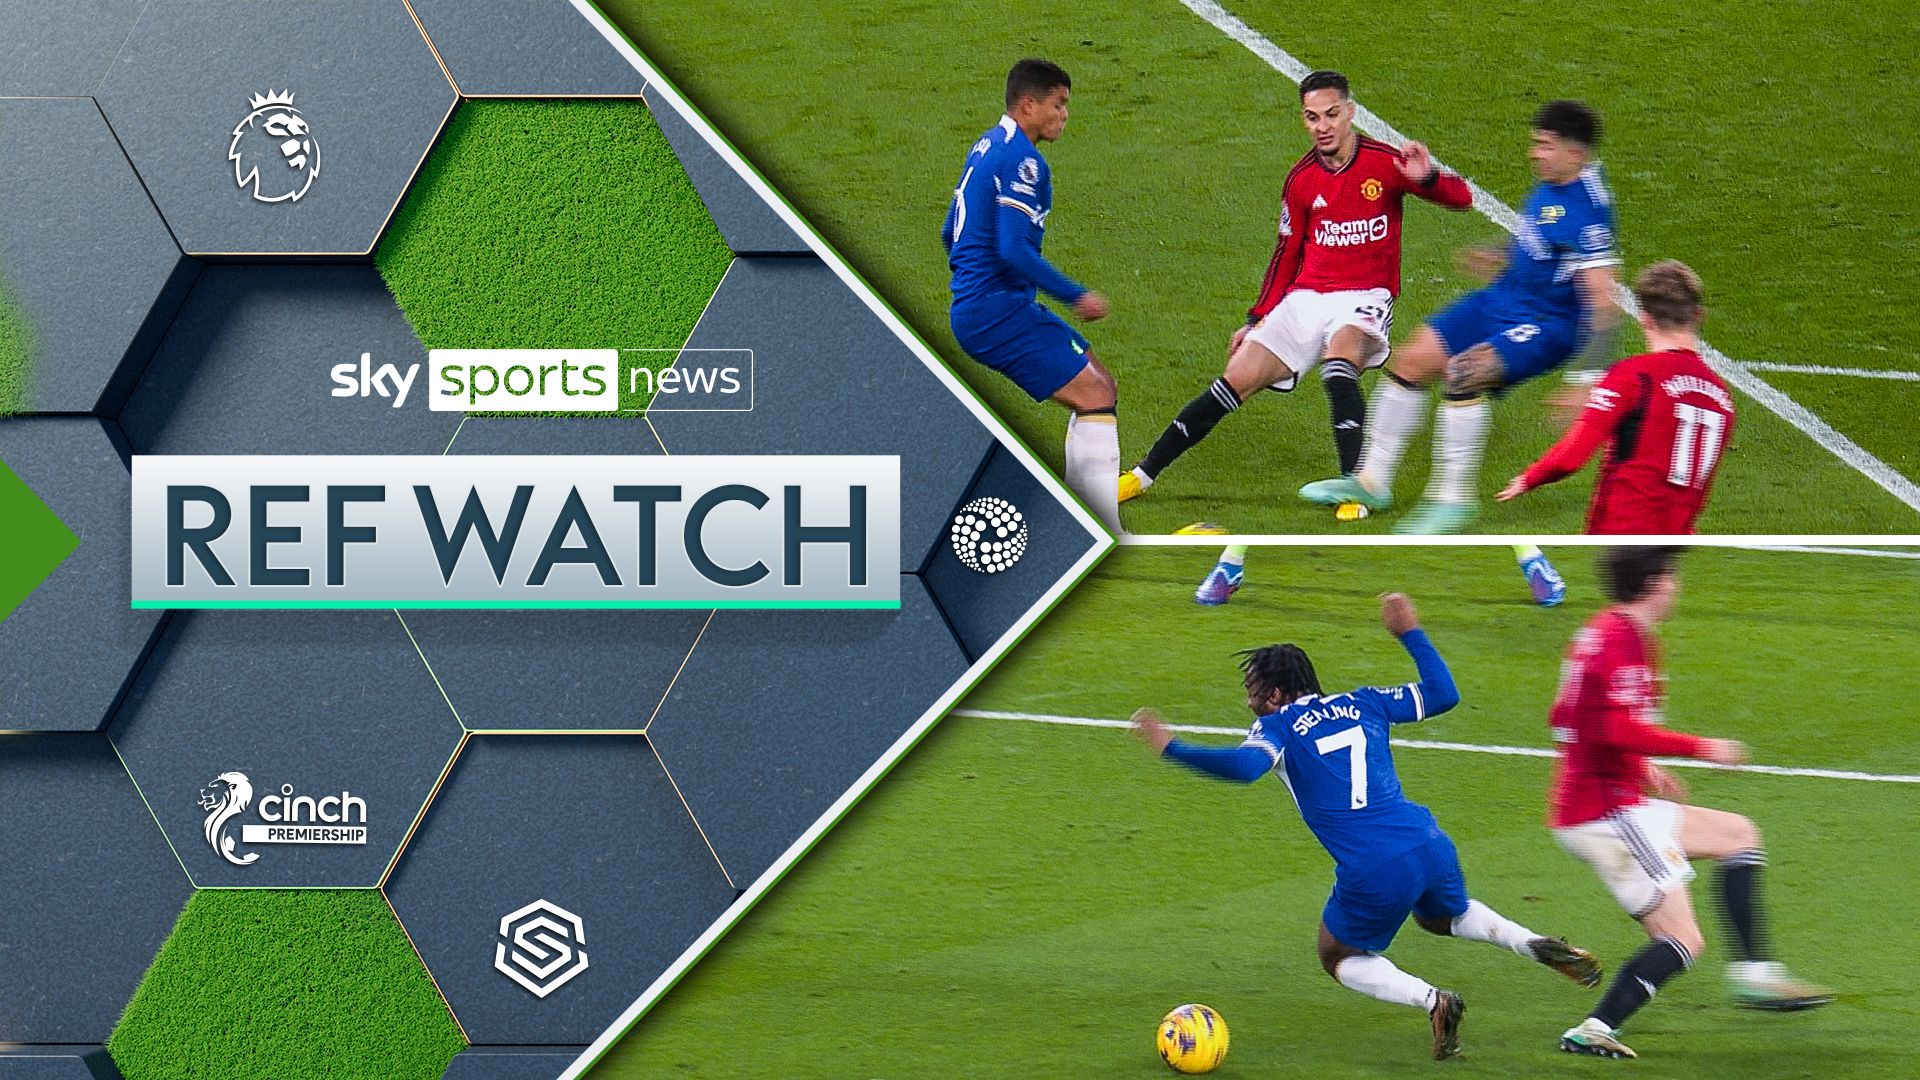 'A modern day penalty' | Ref Watch runs the rule over Man Utd v Chelsea